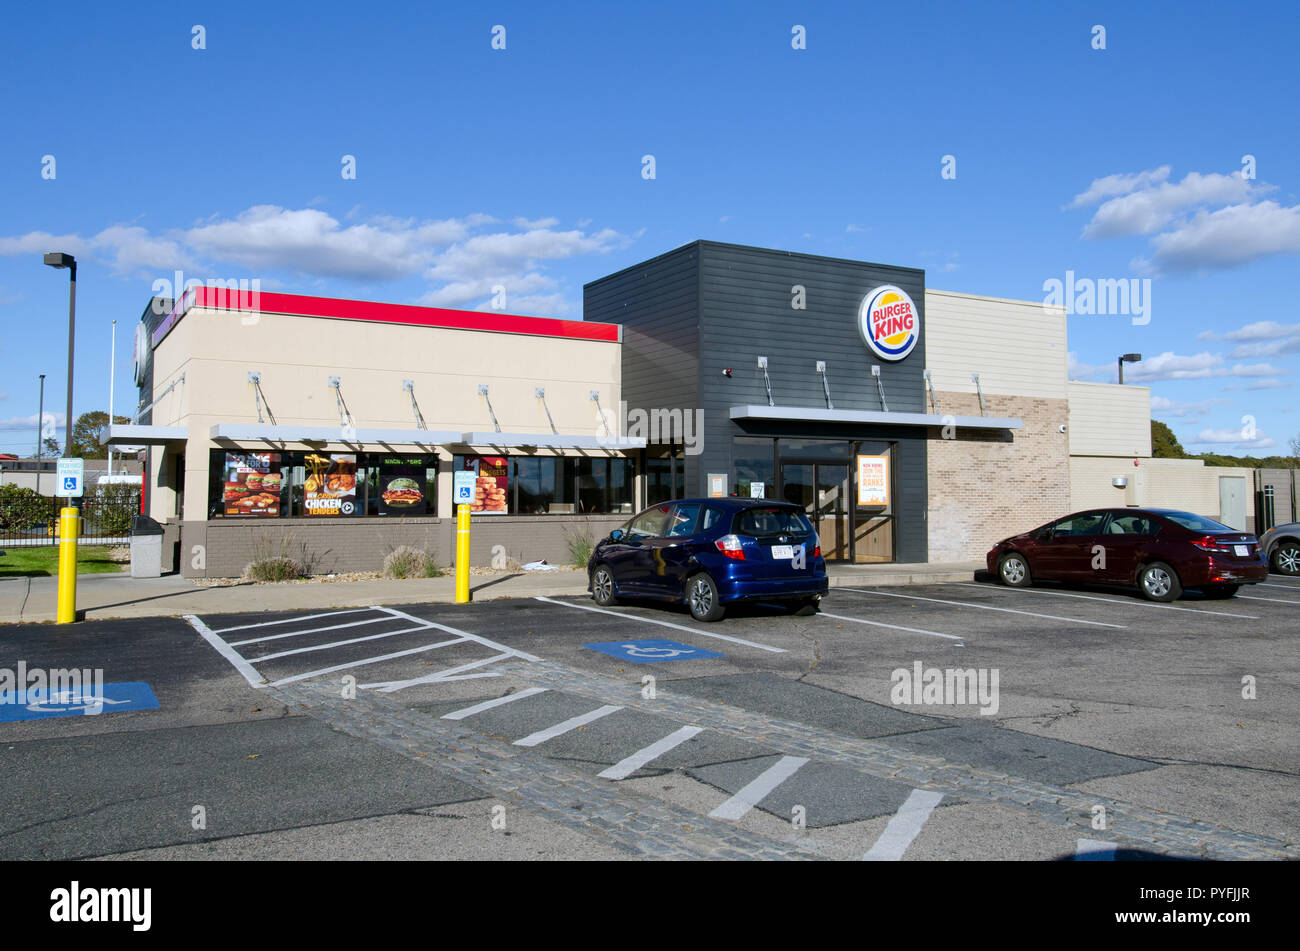 Burger King fast food Franchise Restaurant außen in Falmouth, Cape Cod Massachusetts, USA Stockfoto